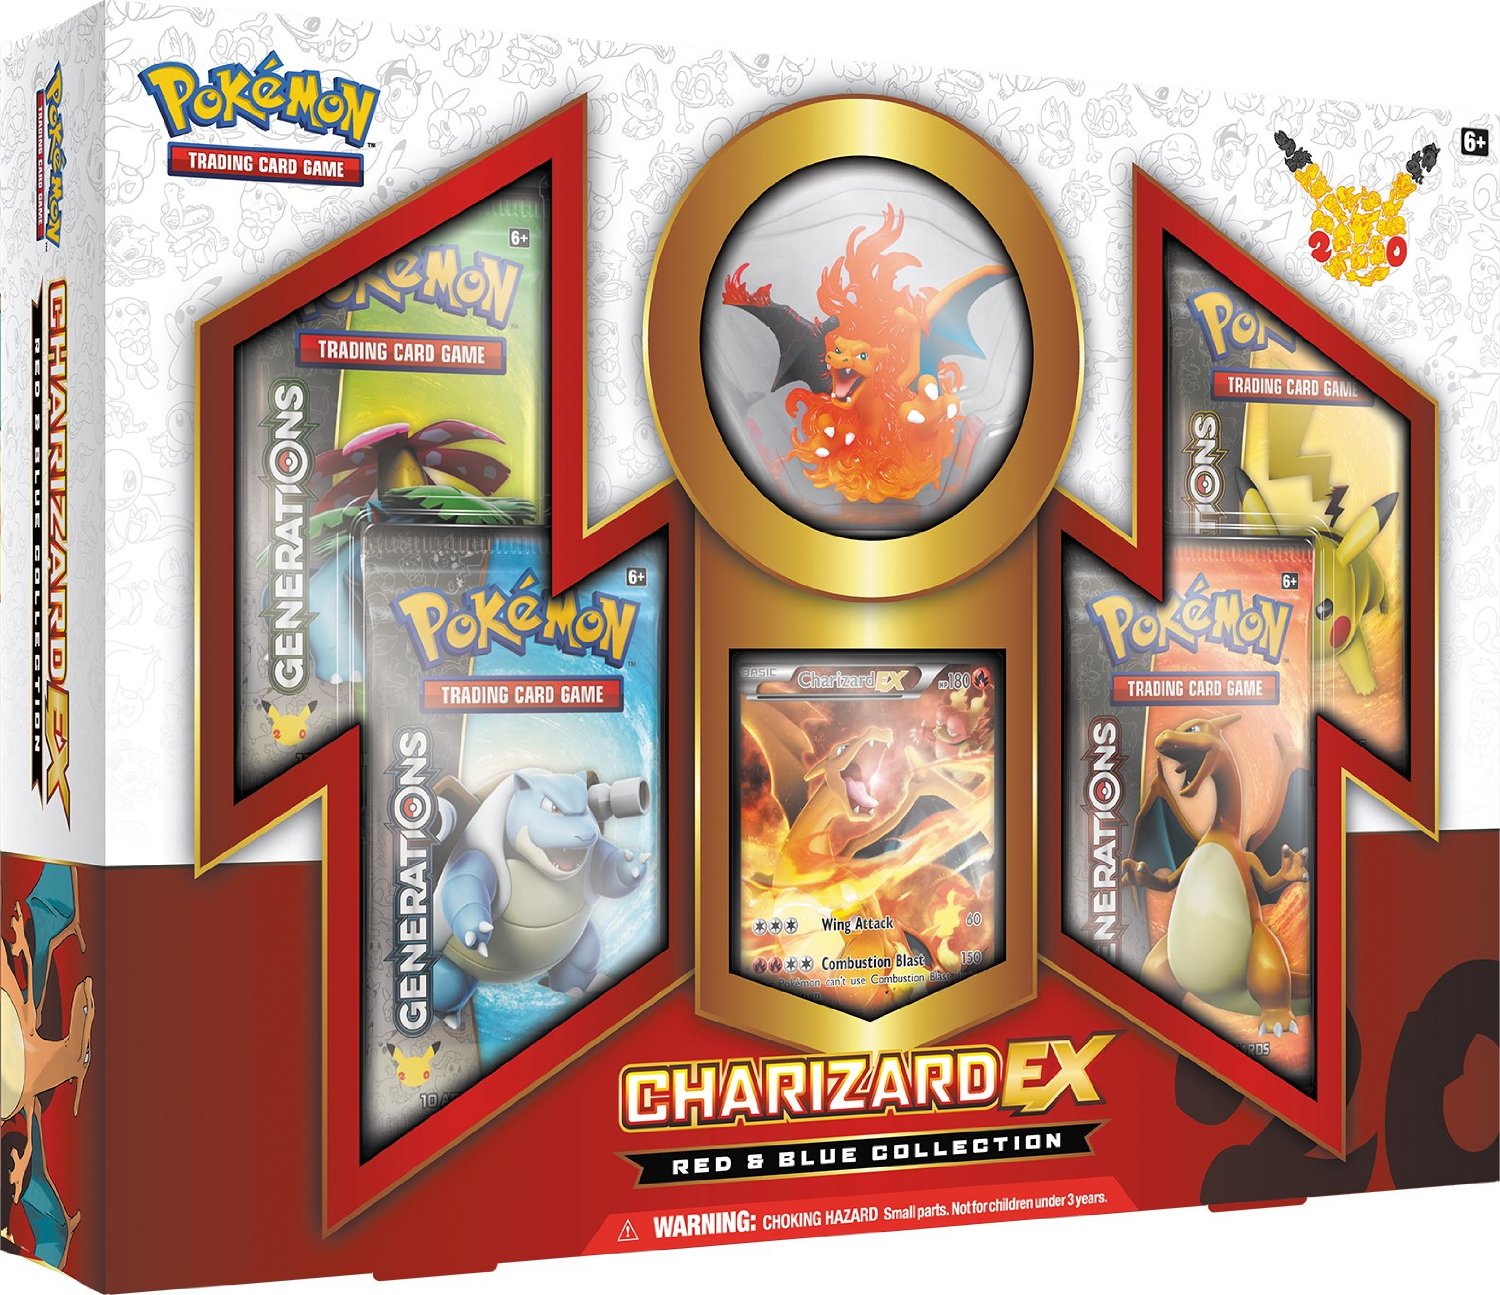 Pokemon Charizard EX 'Red & Blue Collection' Box Set